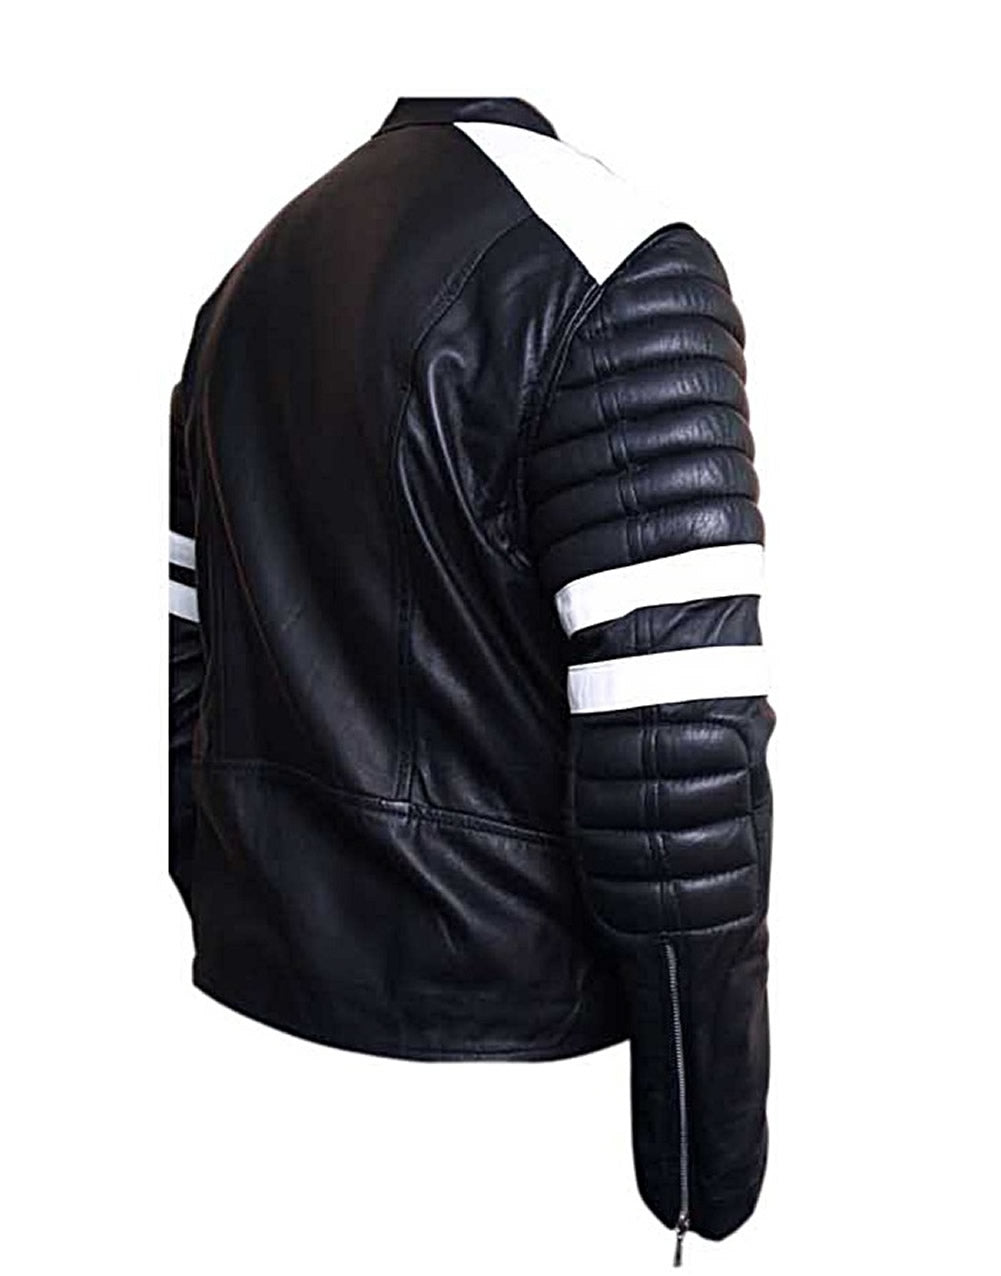 Classyak Fashion Leather Jacket